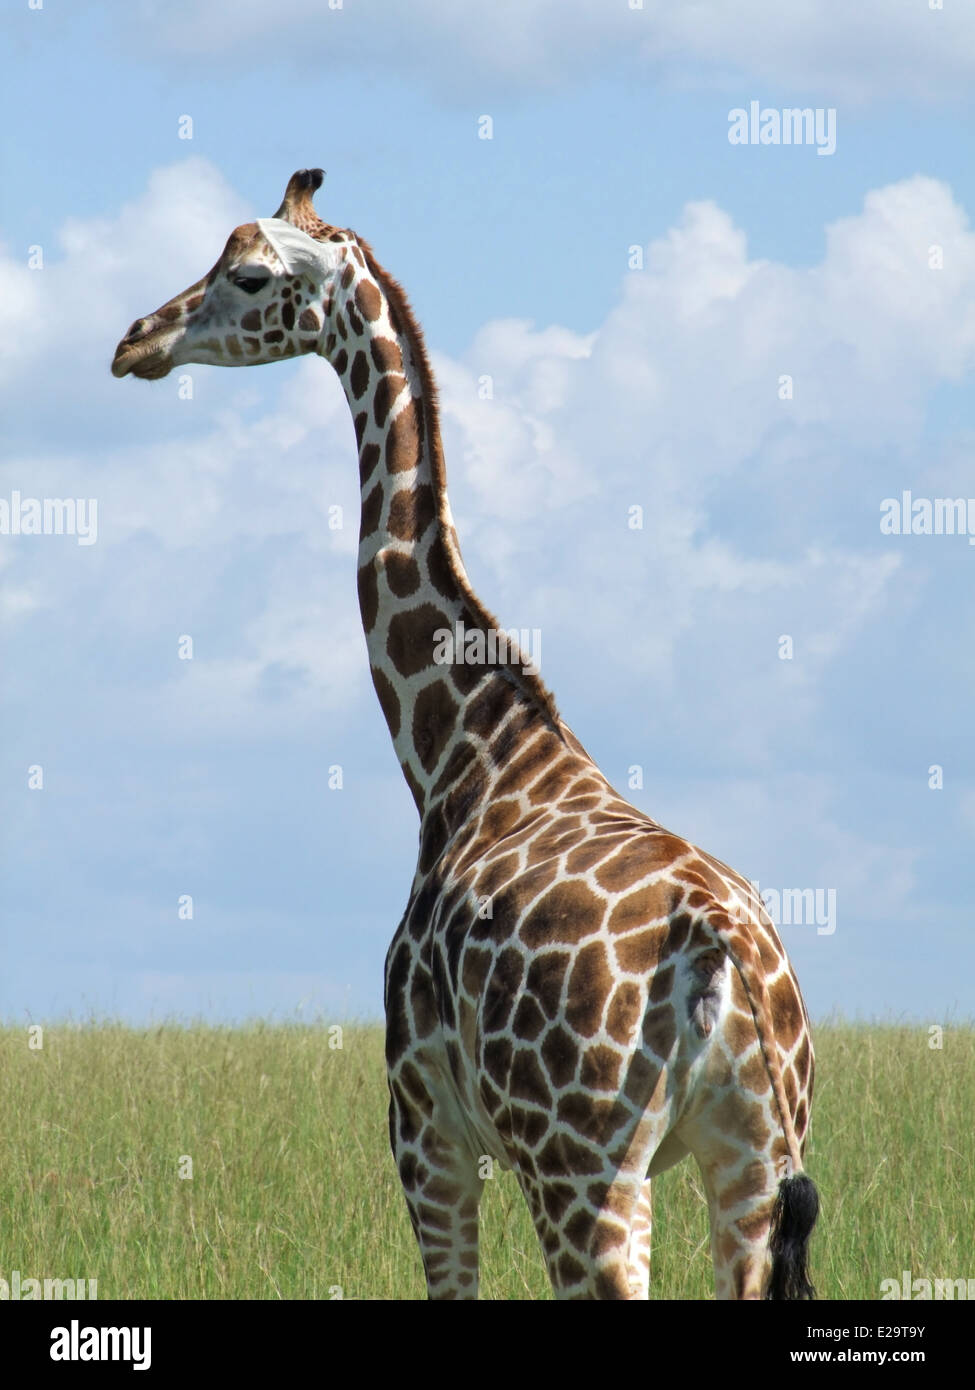 Dettaglio di una giraffa Rothschild in Uganda (Africa) Foto Stock